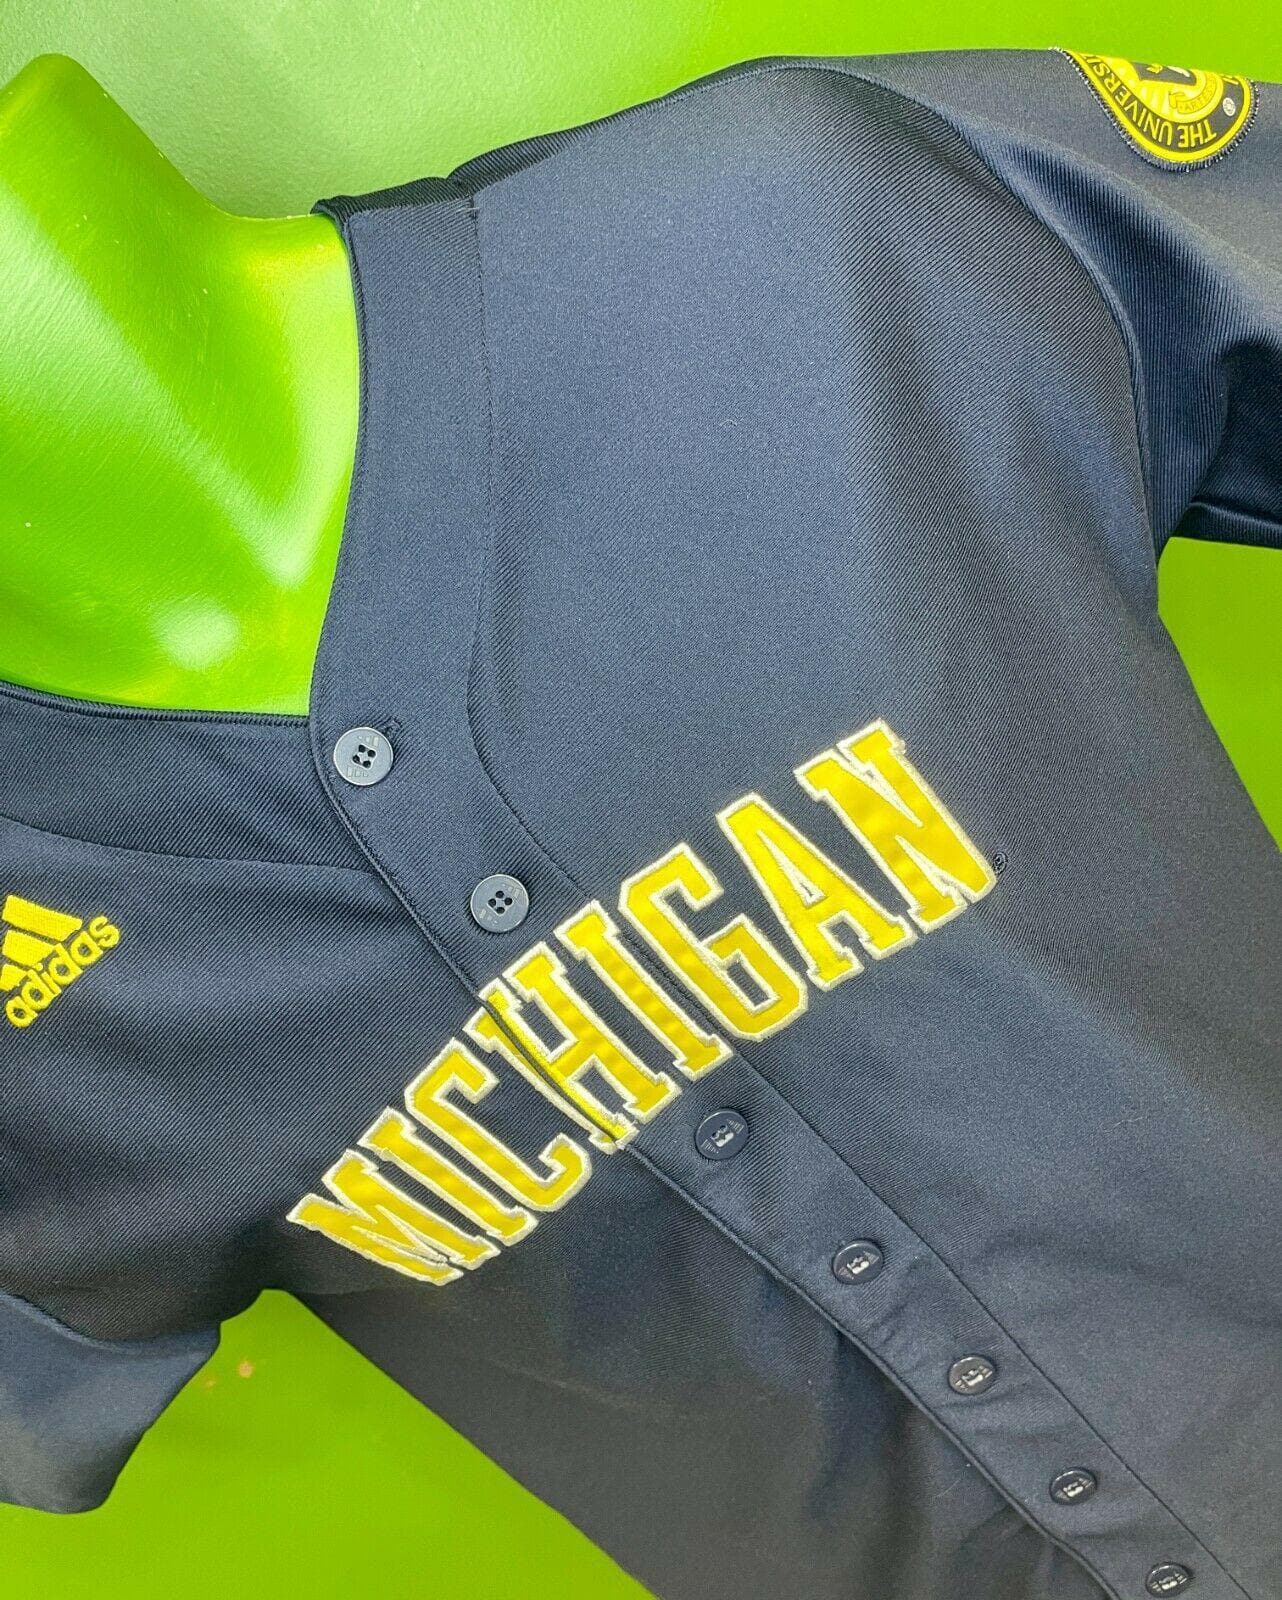 NCAA Michigan Wolverines Adidas Stitched Baseball Jersey Youth Medium